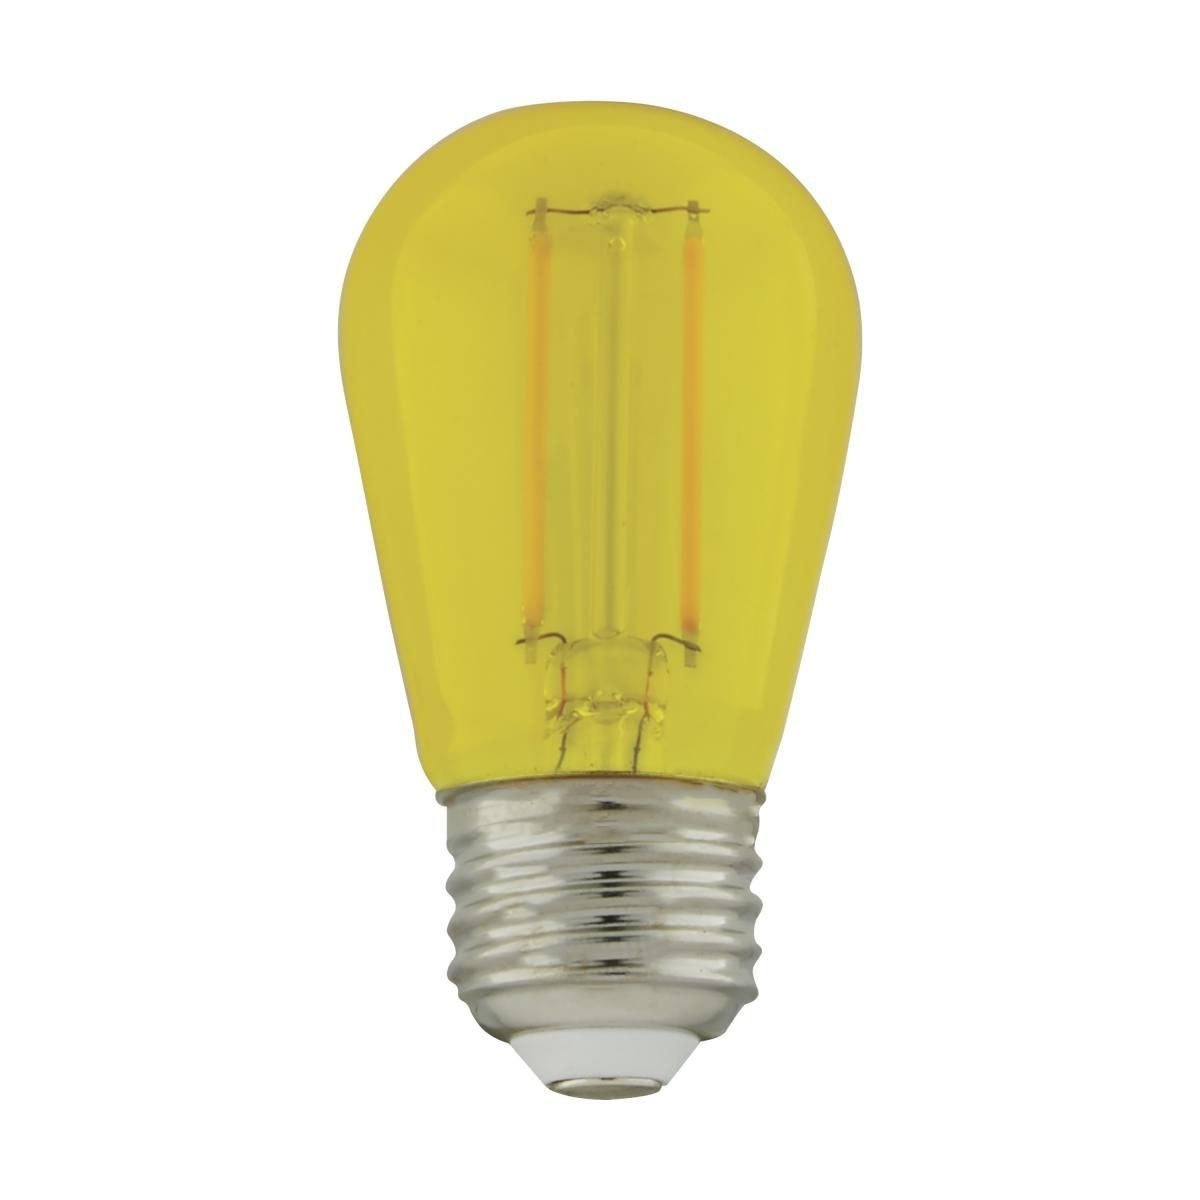 LED S14 Straight Tapered Bulb, 1 Watt, 120 Lumens, Yellow, E26 Medium Base, Clear Finish, Pack Of 4